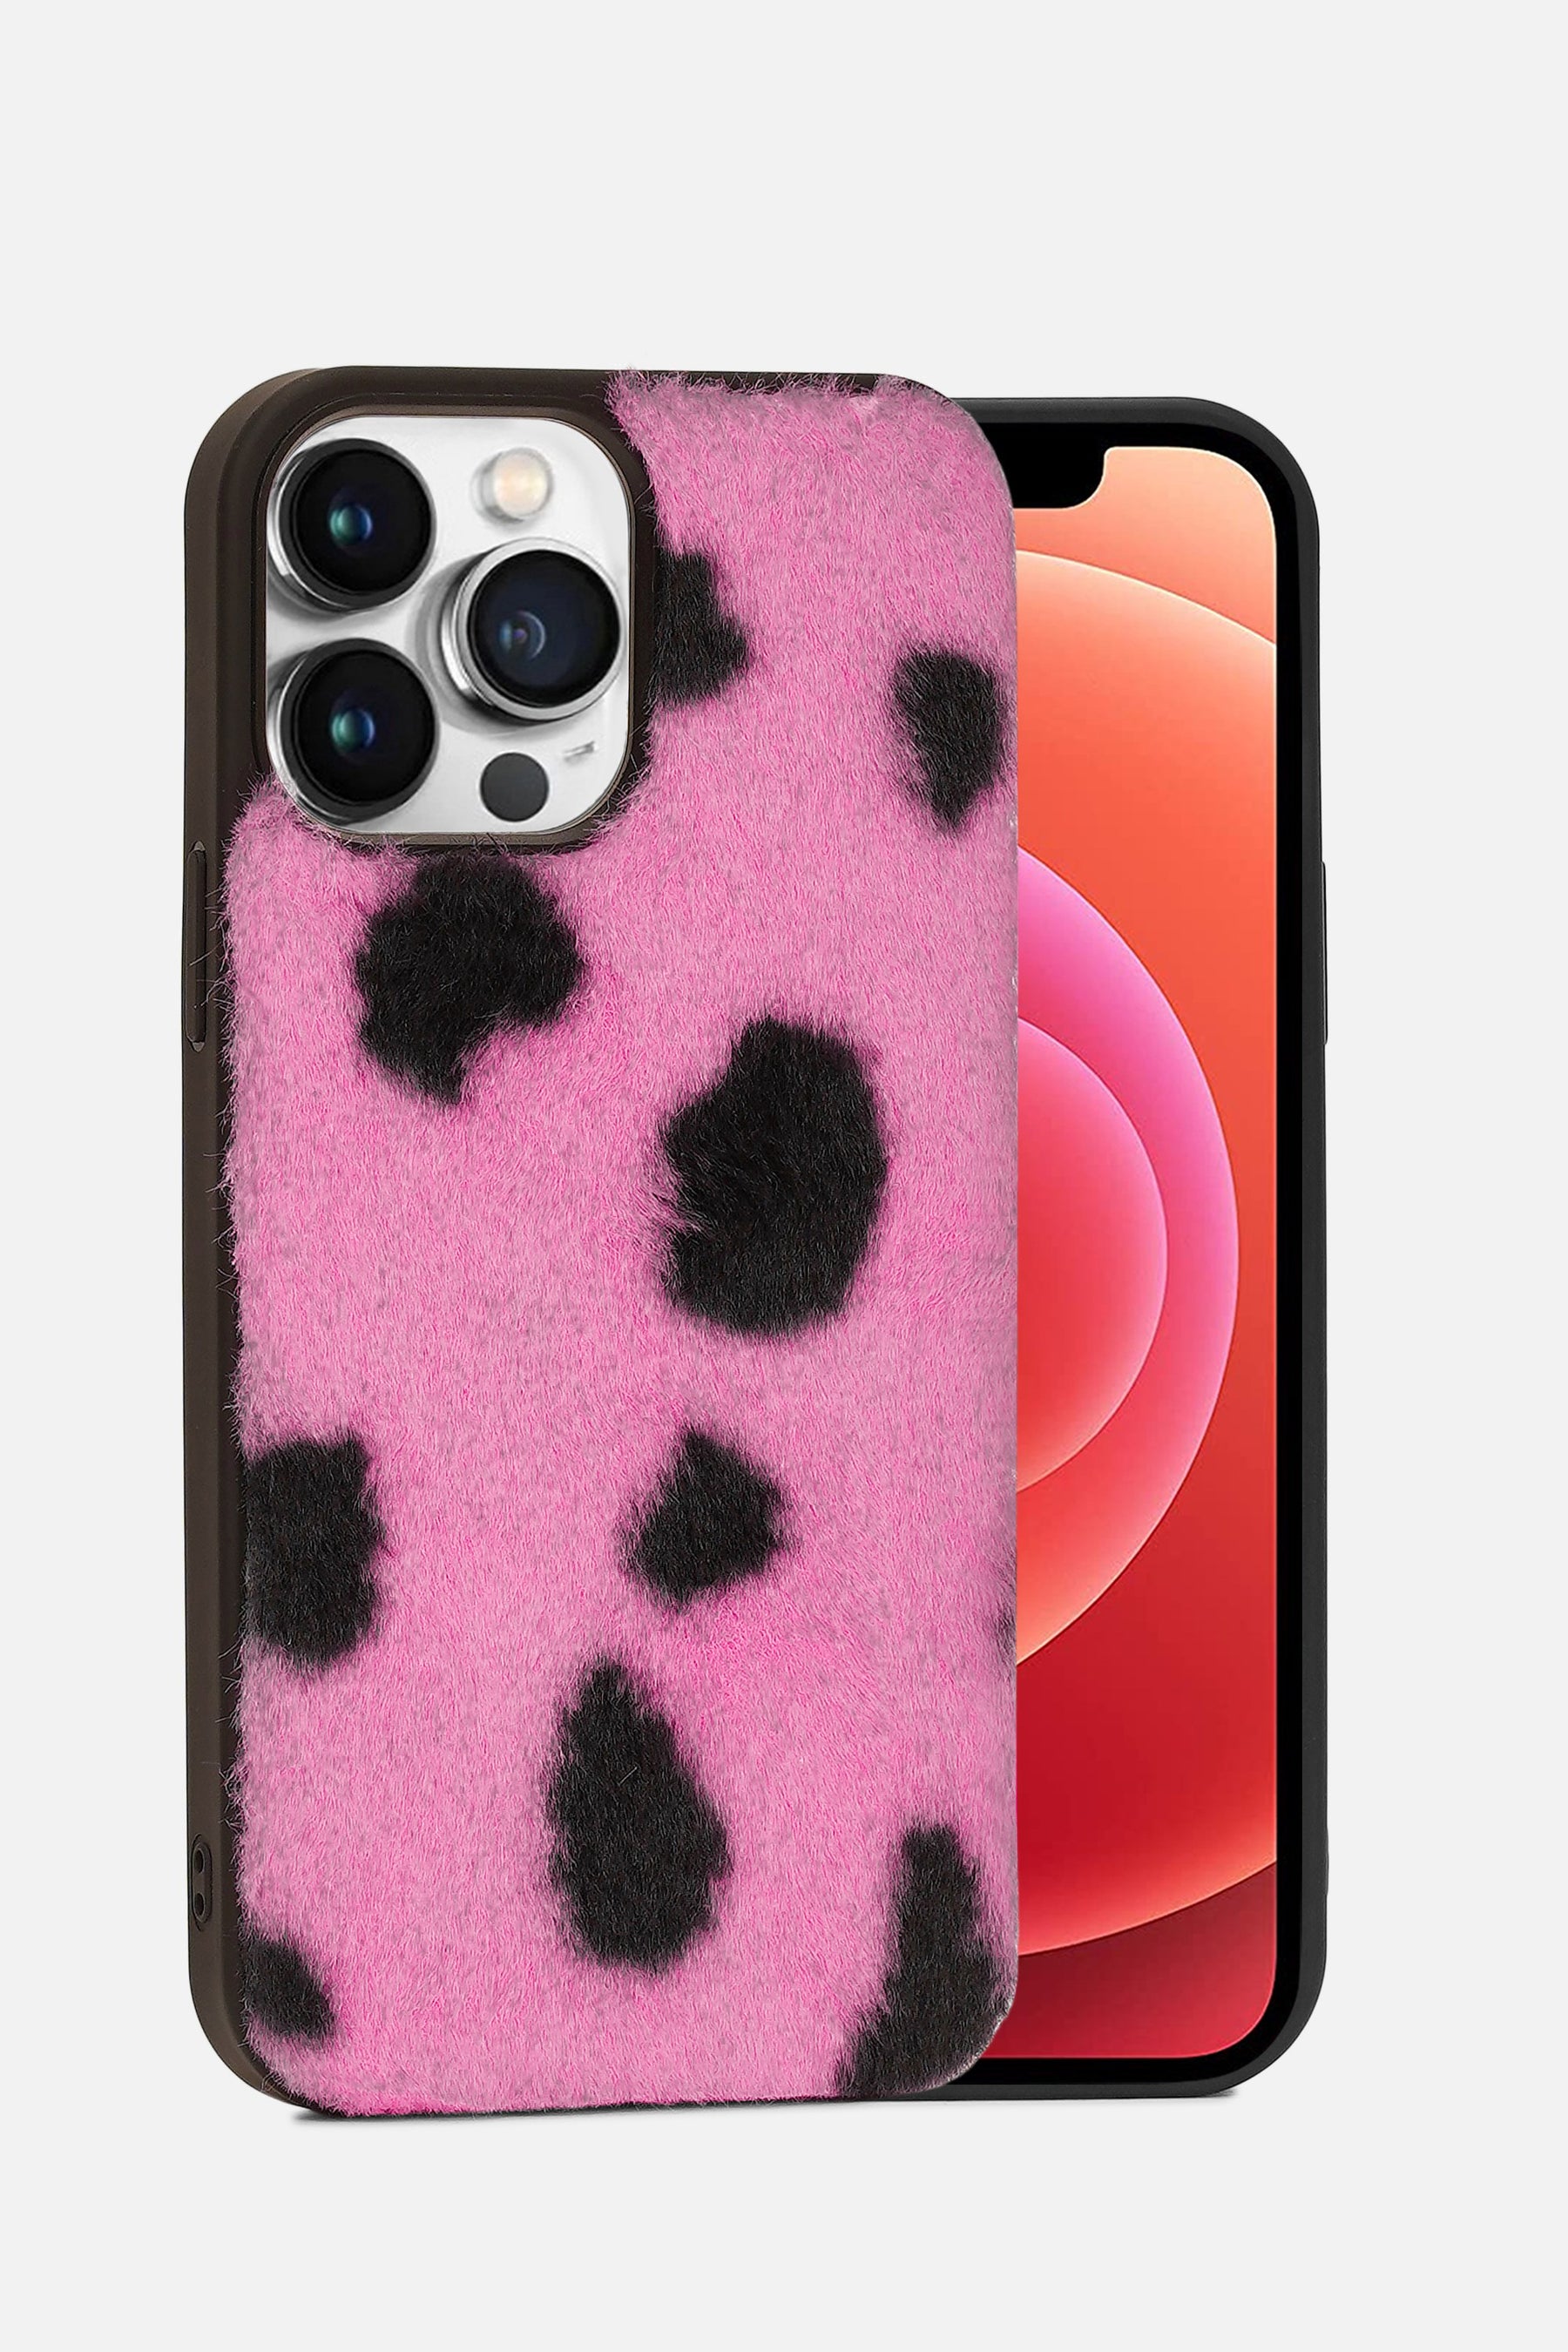 iPhone Printed Fur Case - Soft Pink